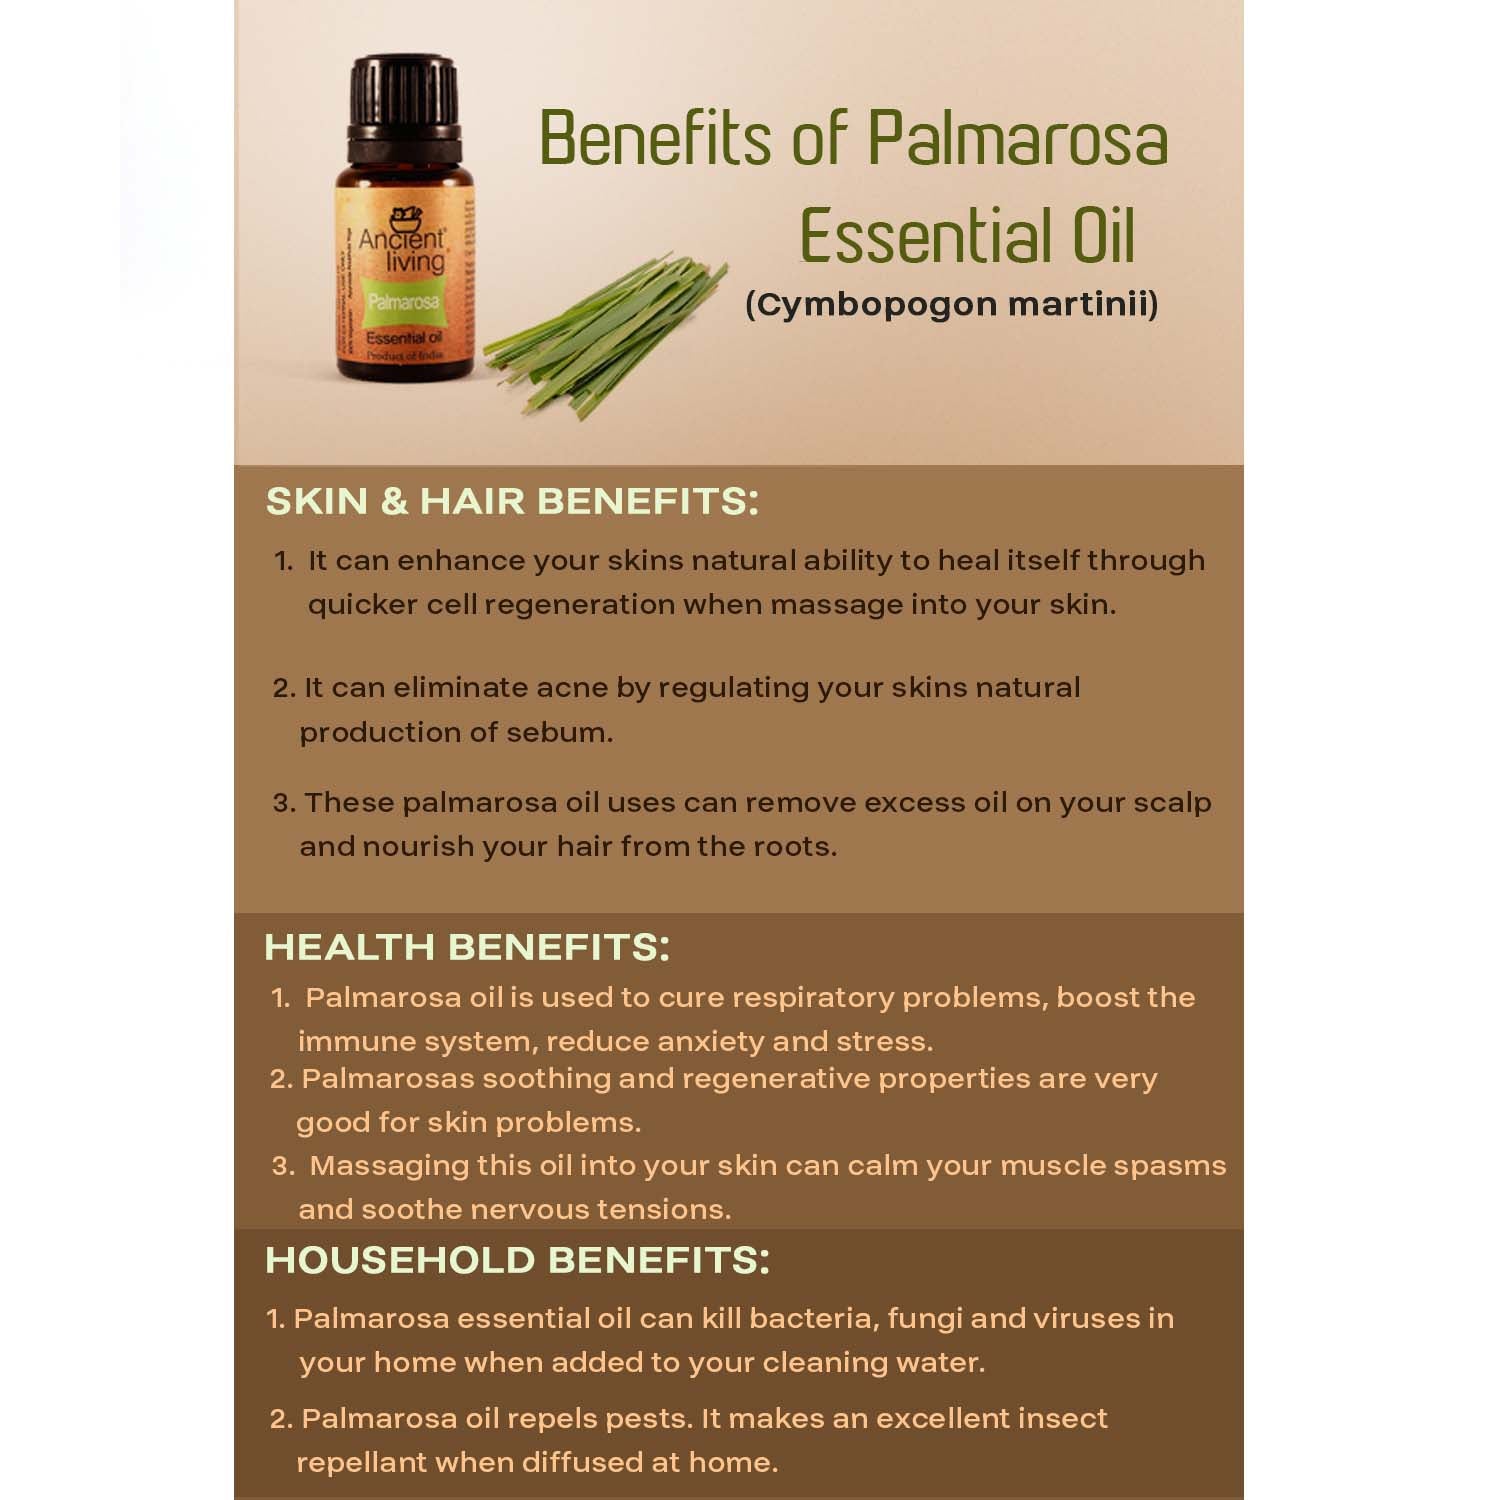 Palmarosa Essential Oil - Ancient Living